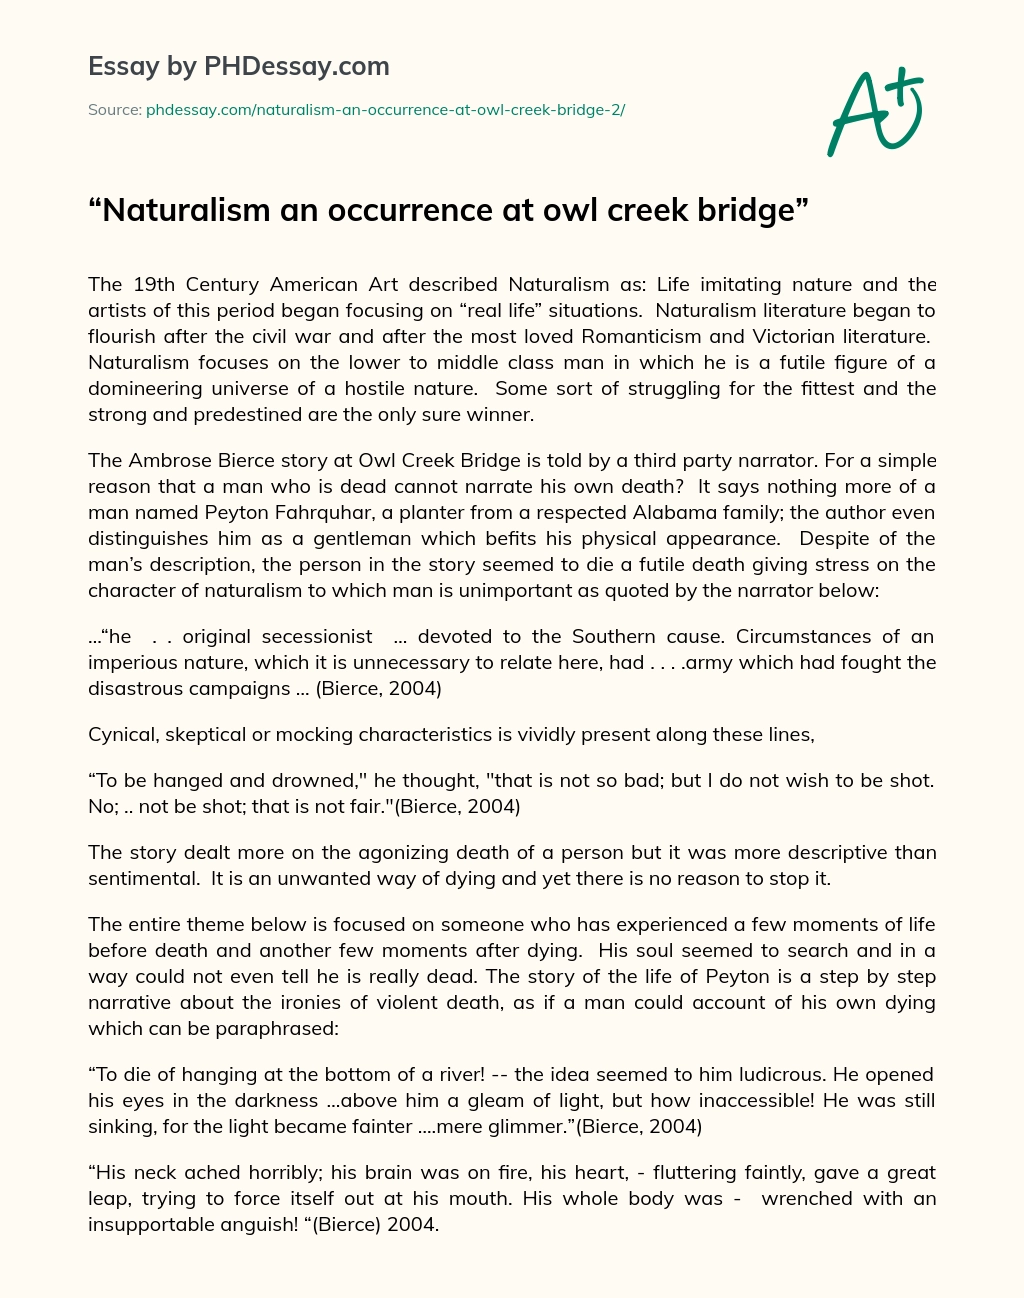 Naturalism an occurrence at owl creek bridge essay